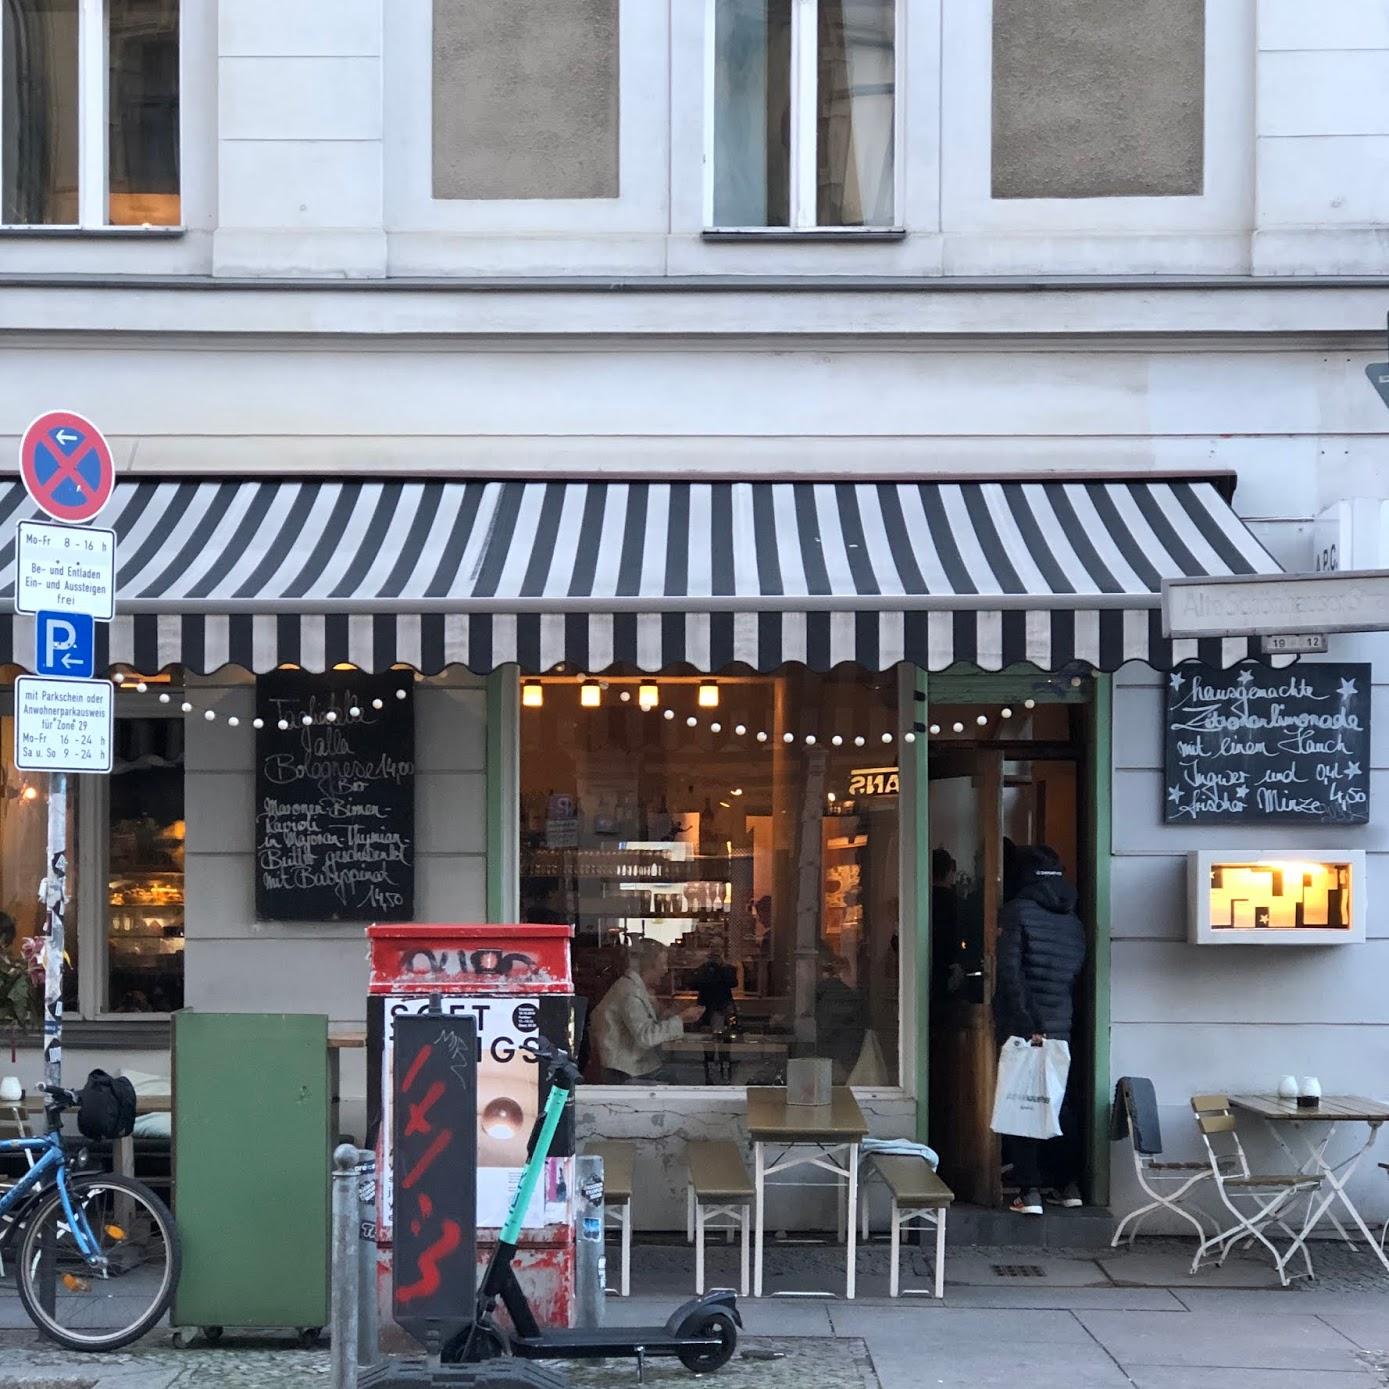 Restaurant "Mädchenitaliener" in  Berlin